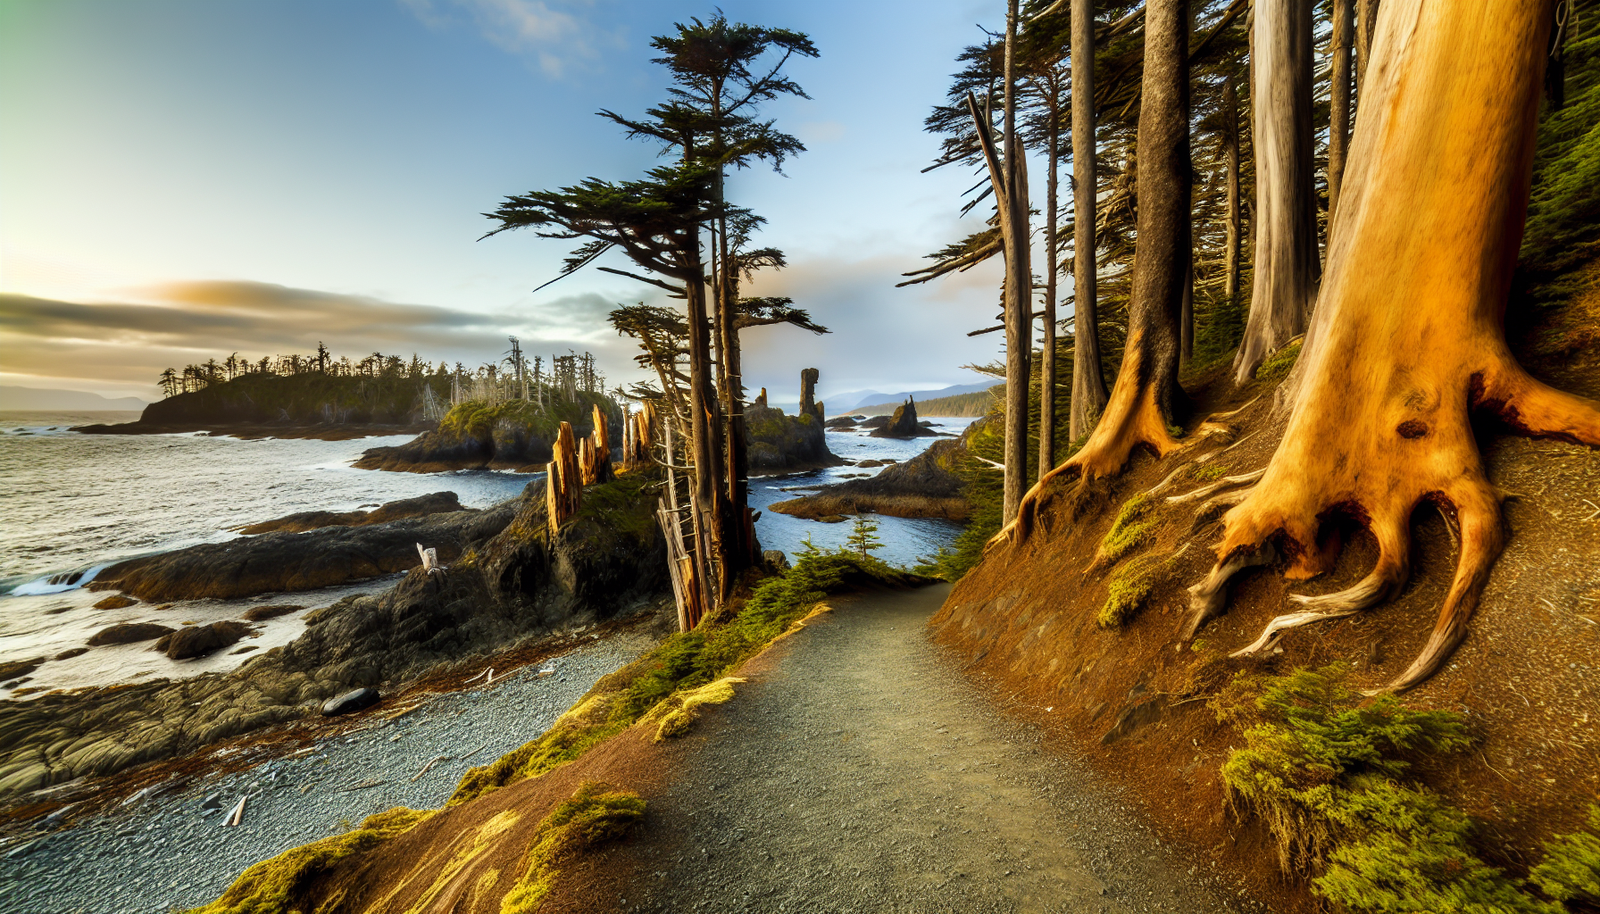 Scenic hiking trail overlooking the coastline of Haida Gwaii